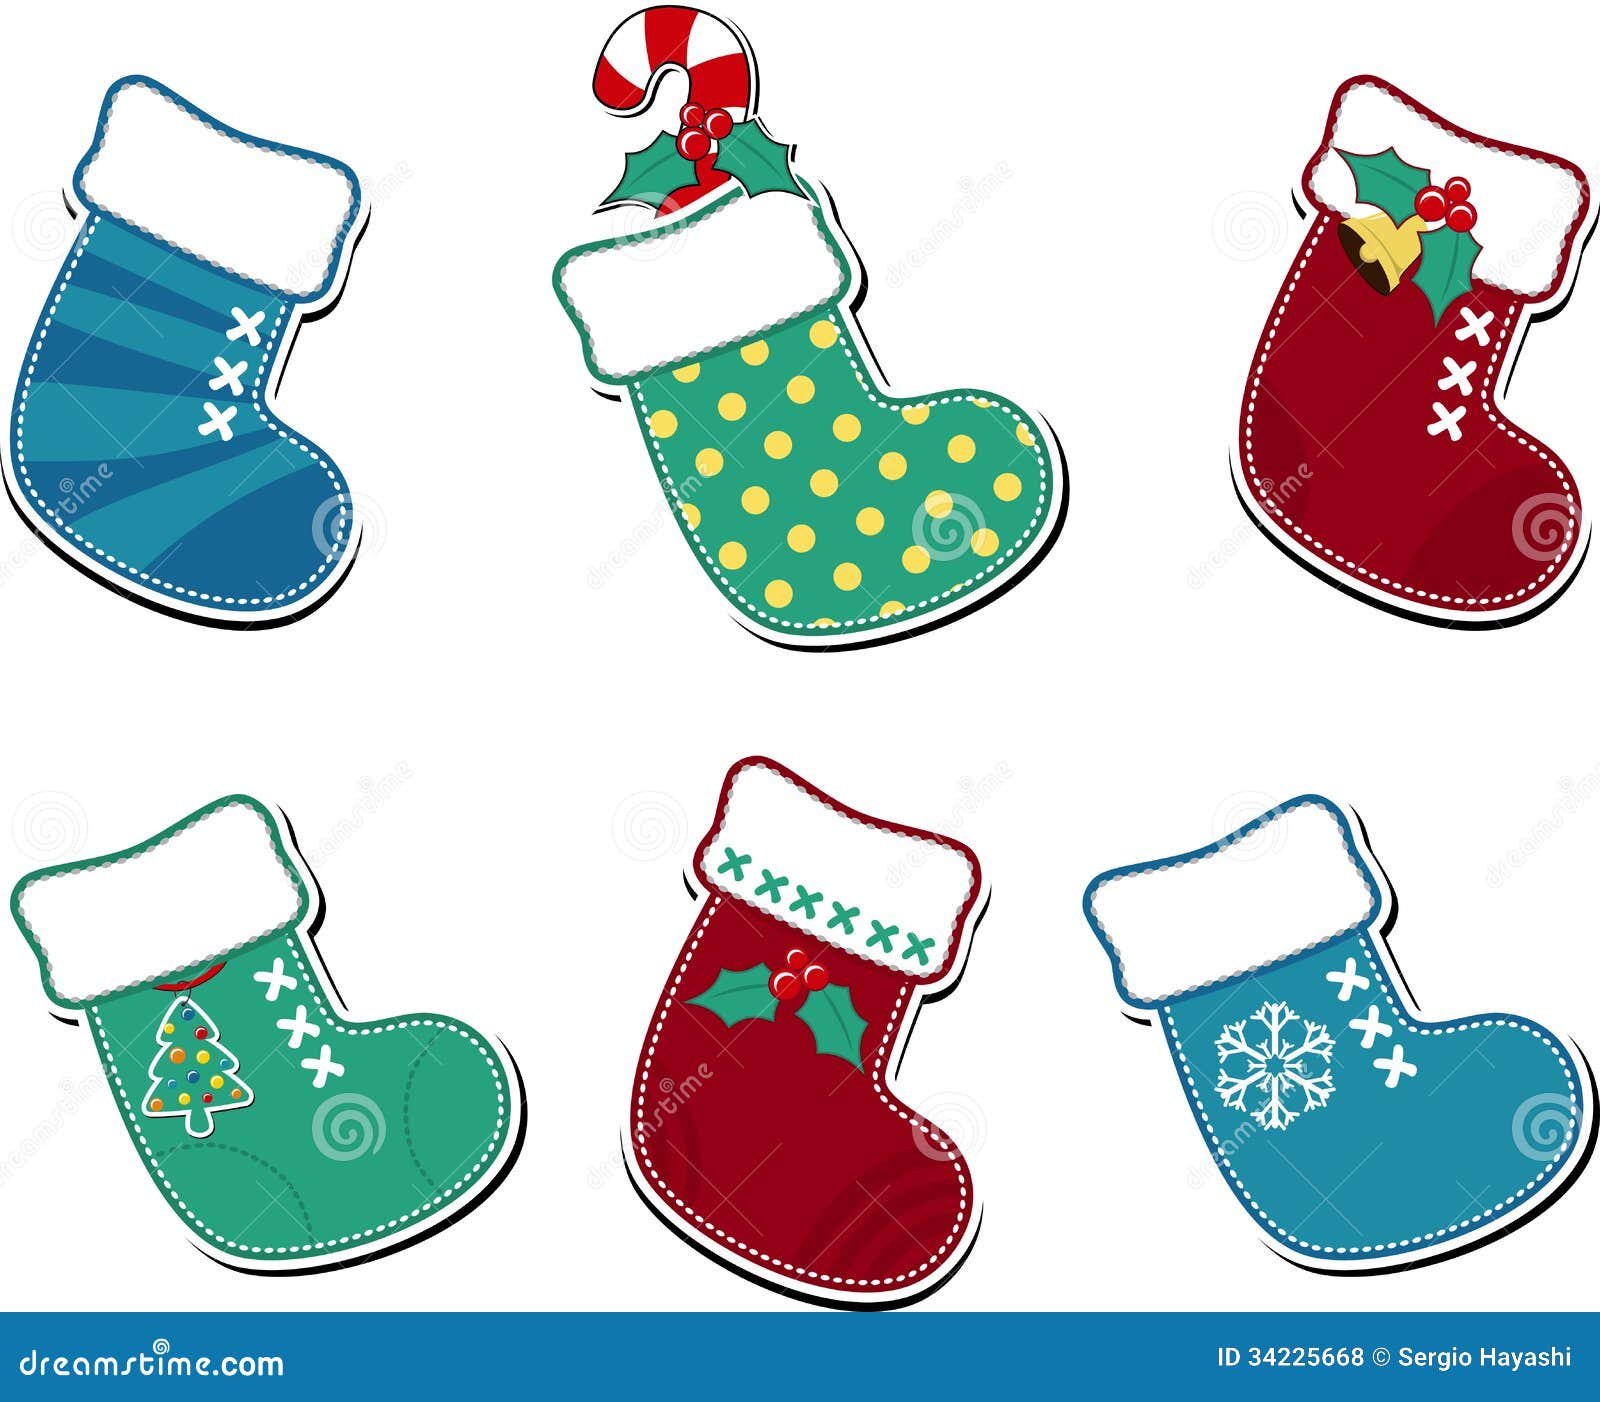 Cute christmas socks stock vector. Illustration of cartoon - 34225668